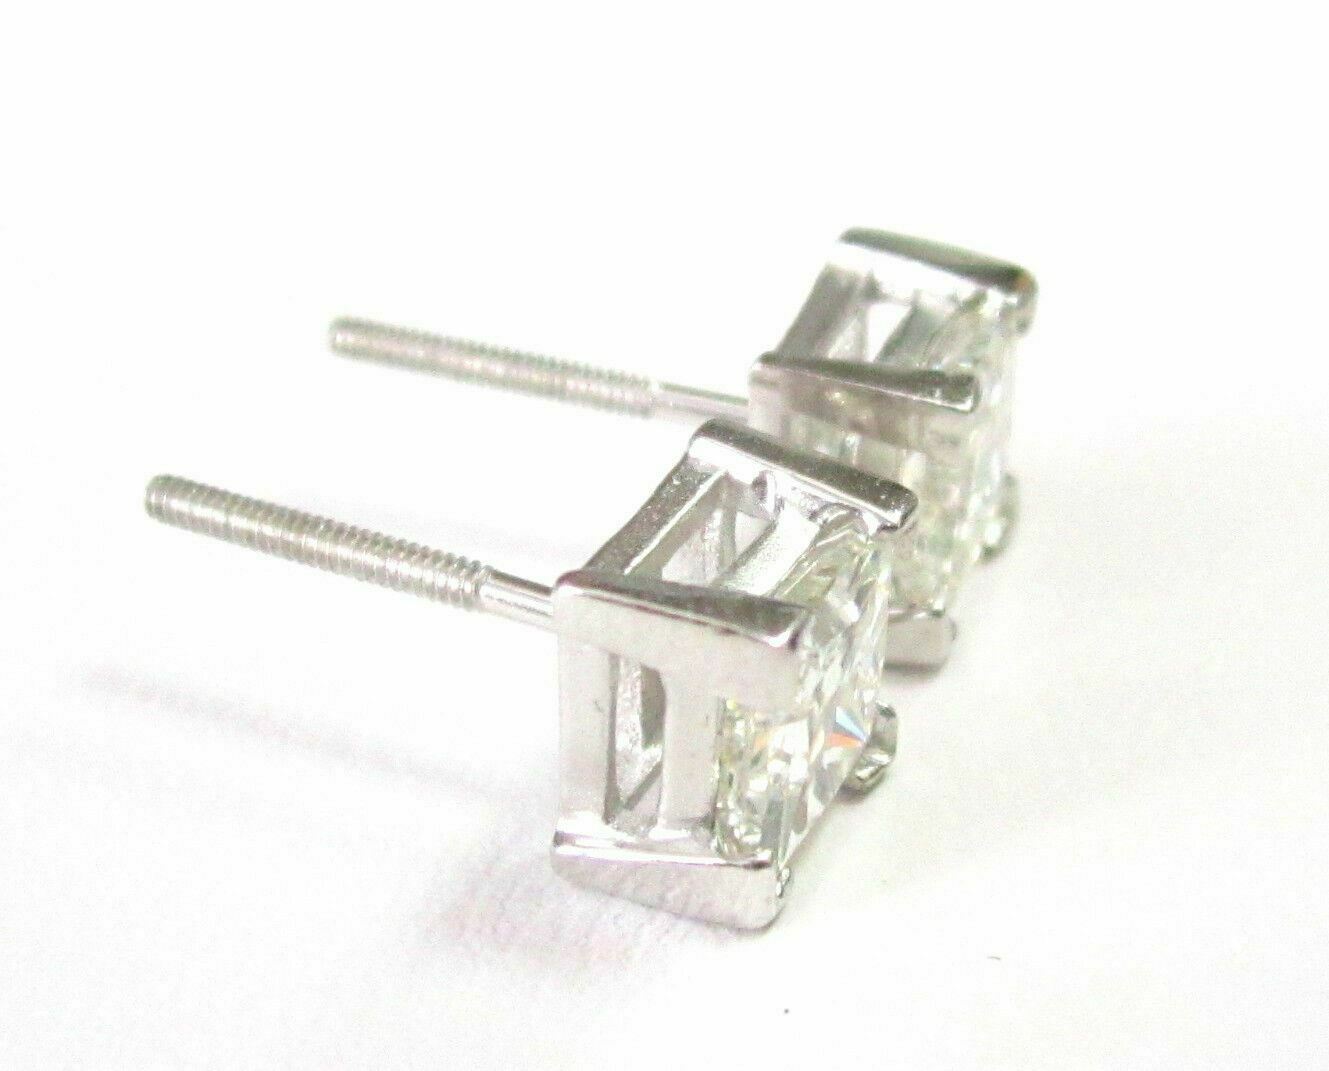 2.14 TCW Princess Cut Diamond Stud Earrings Screw Back G VS2-SI1 14k White Gold